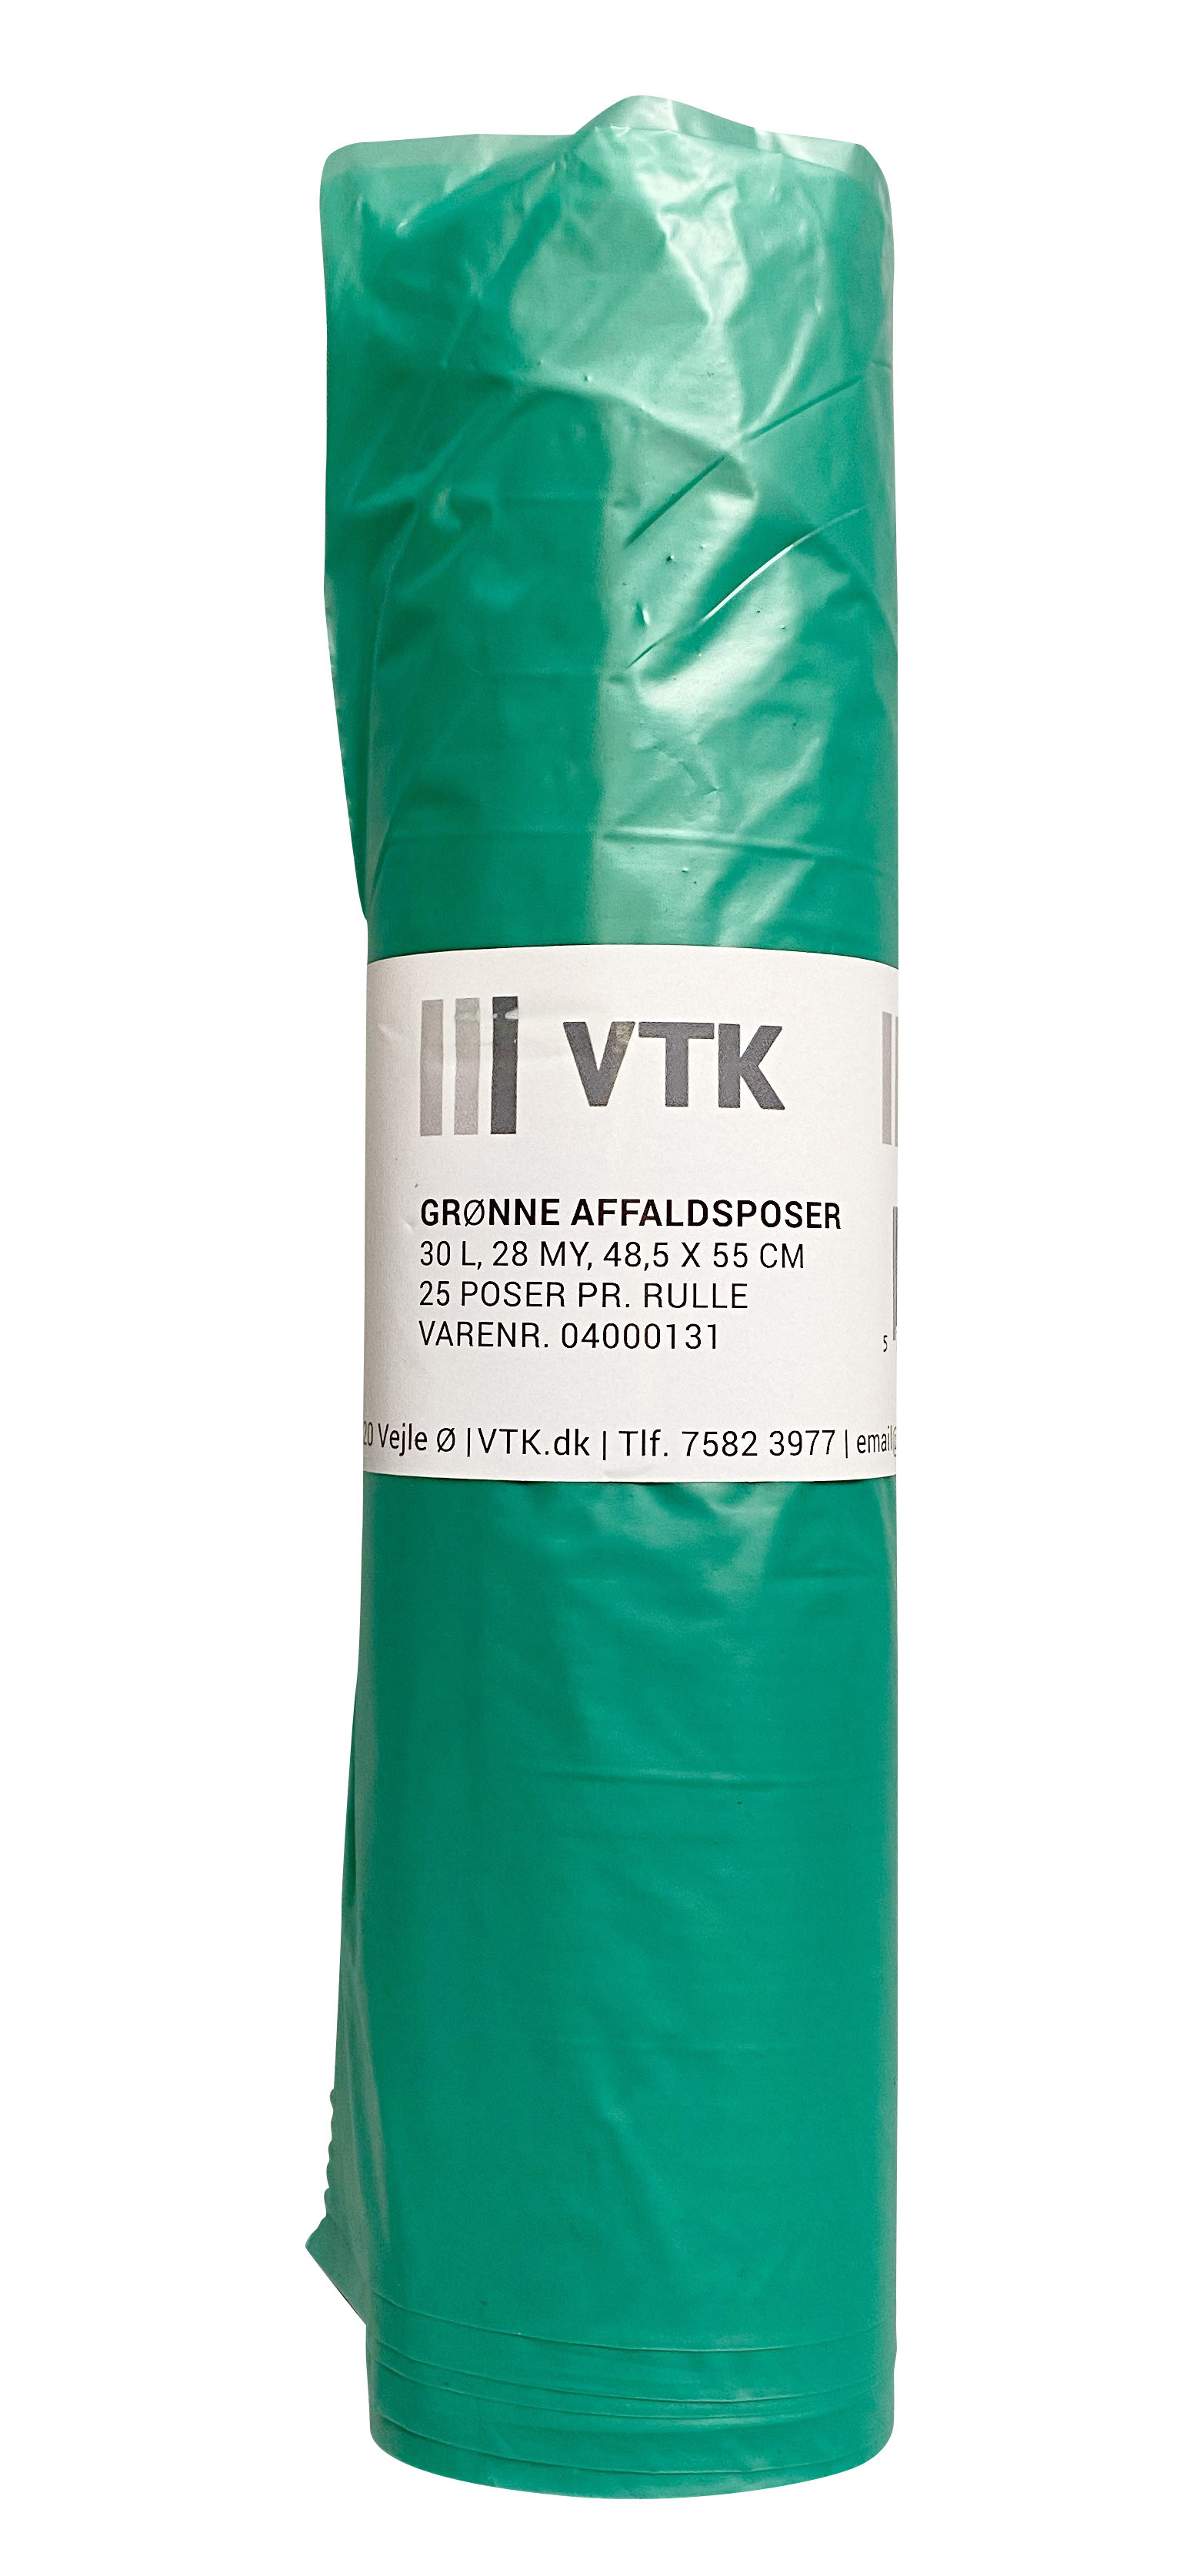 VTK Posen Affaldspose Grøn 30 l 20 rl 48,5 x 55 cm 28 my 25 ps/rl (450118)